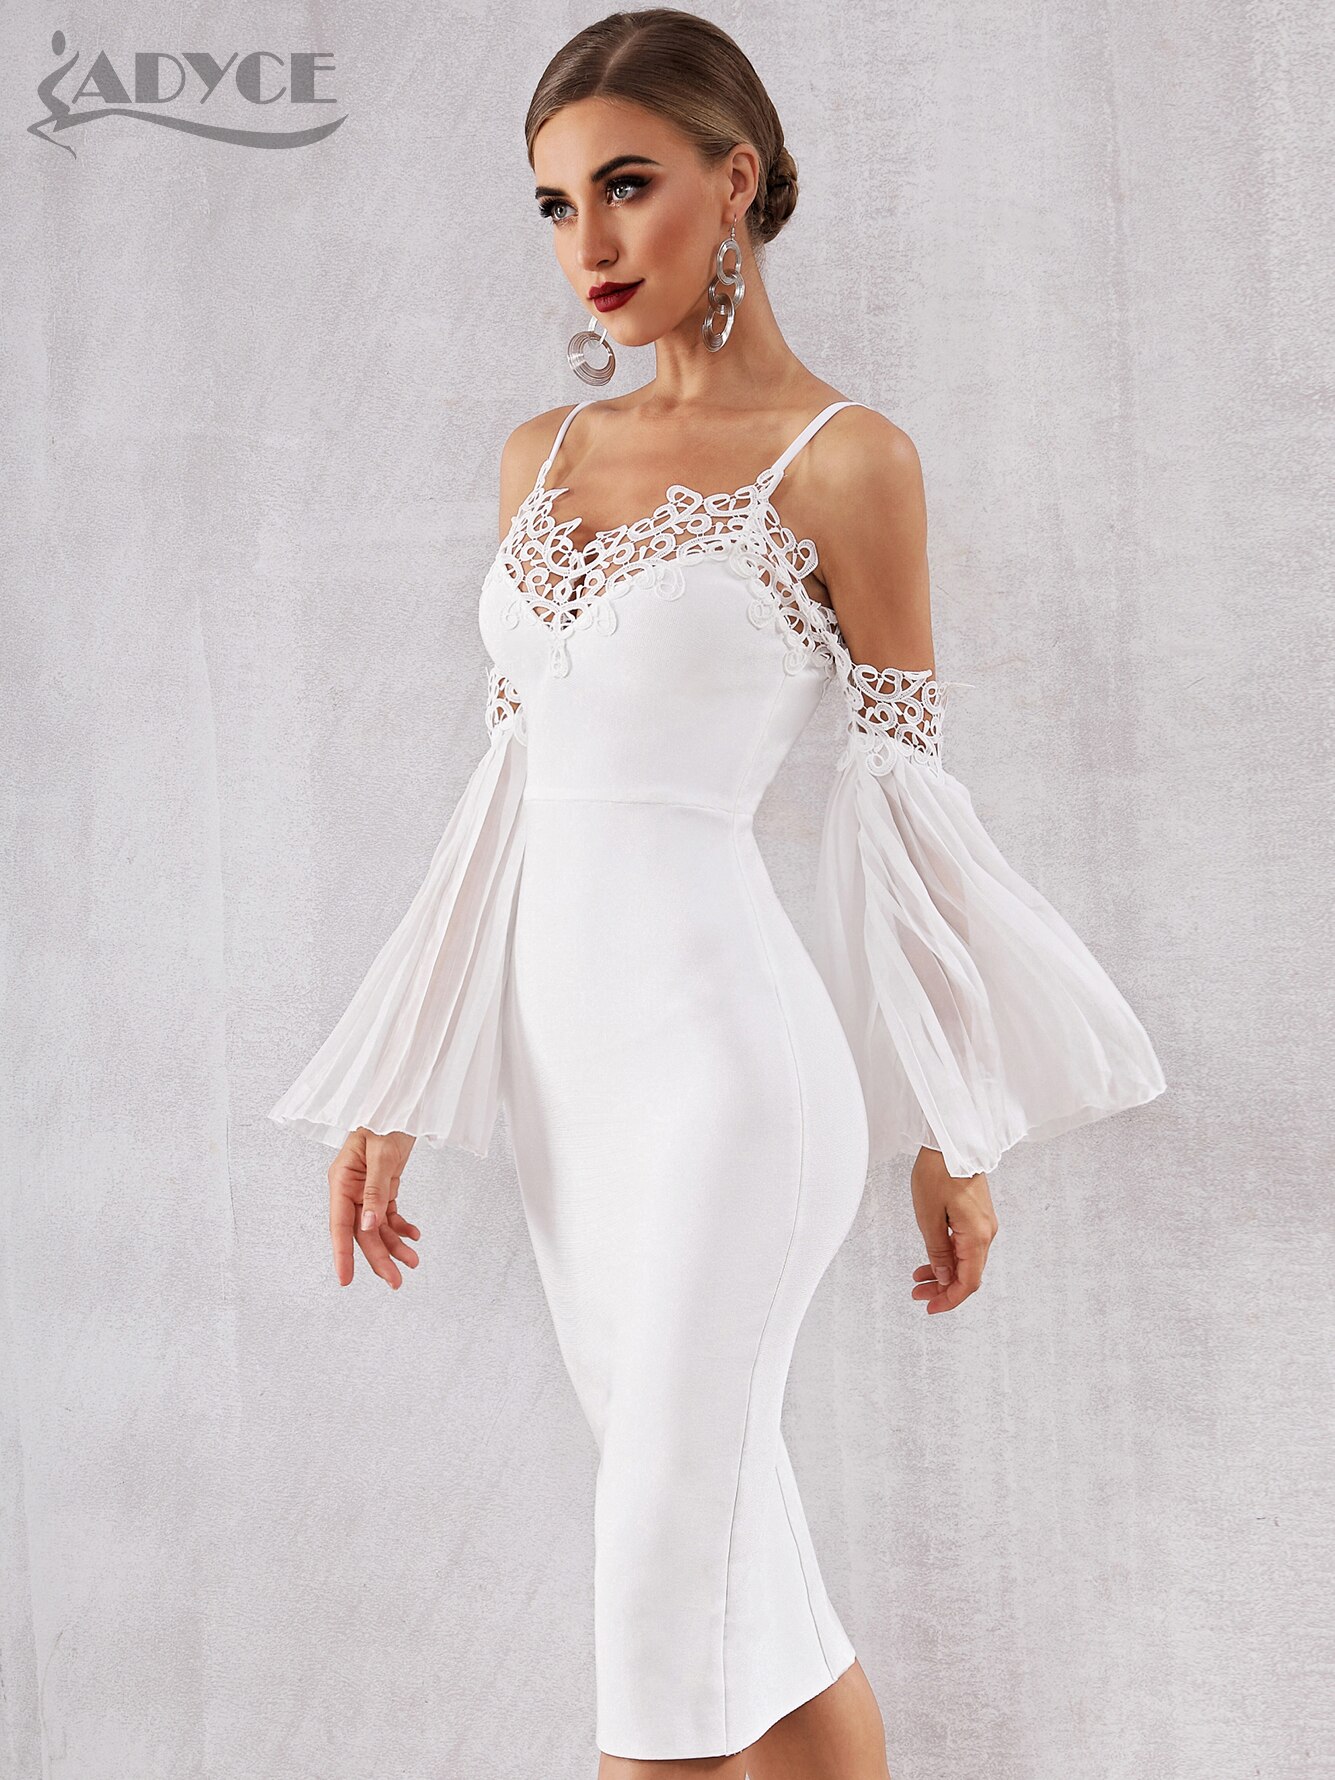 Adyce-2022-New-Winter-Women-Bandage-Dress-Sexy-Flare-Sleeve-White-Lace-Midi-Dress-Vestidos-Elegant-4